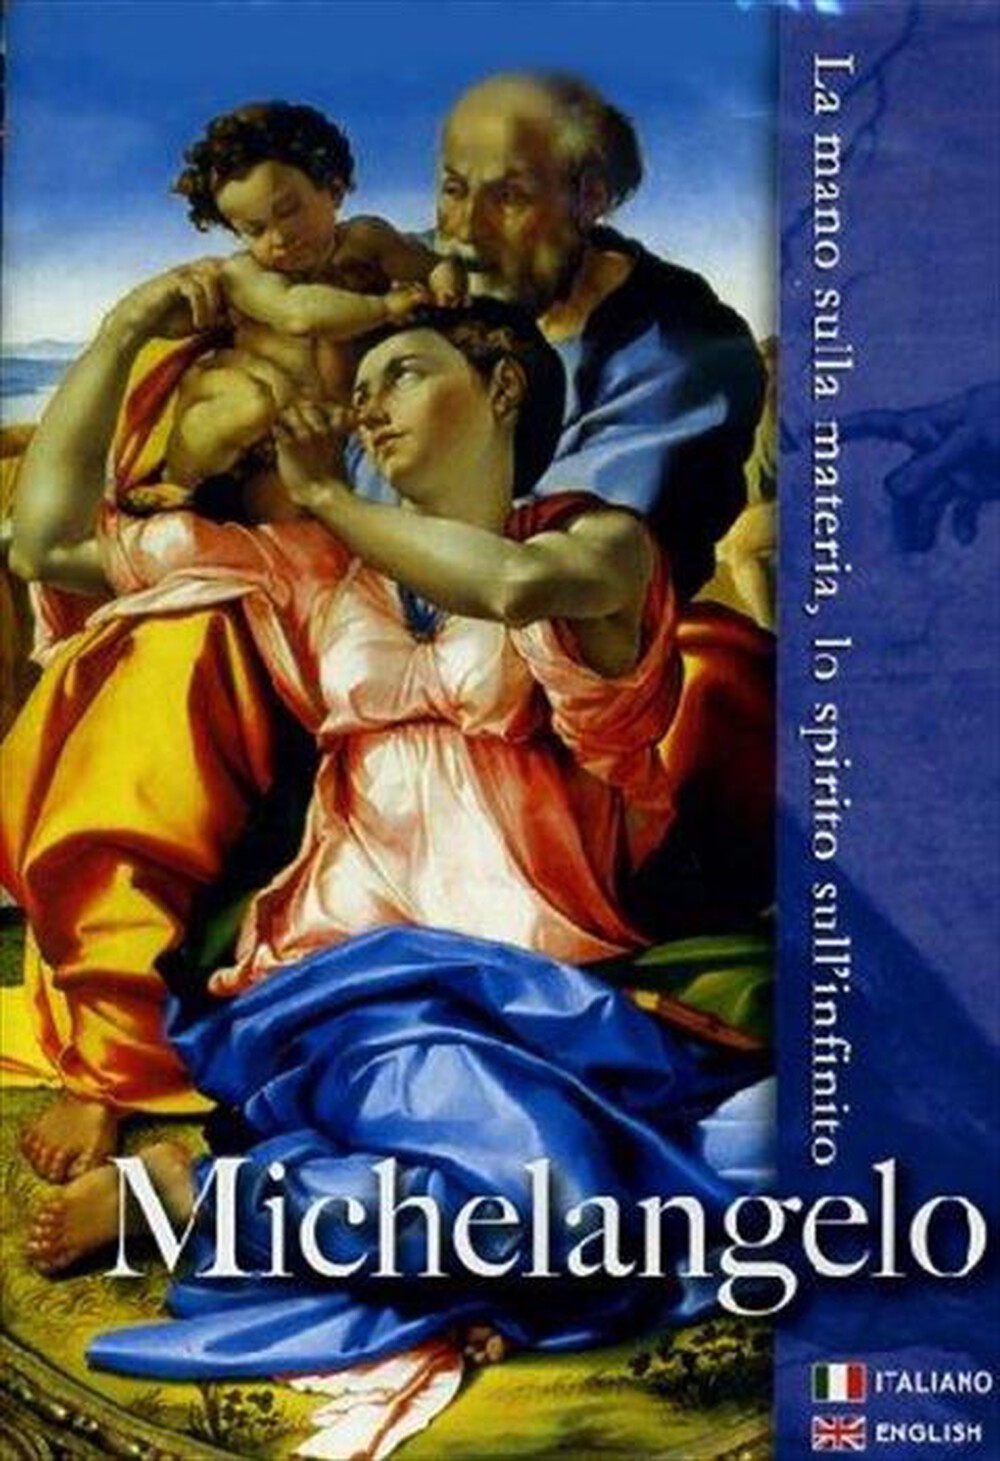 "CINEHOLLYWOOD - Michelangelo - La Mano Sulla Materia, Lo Spirito"